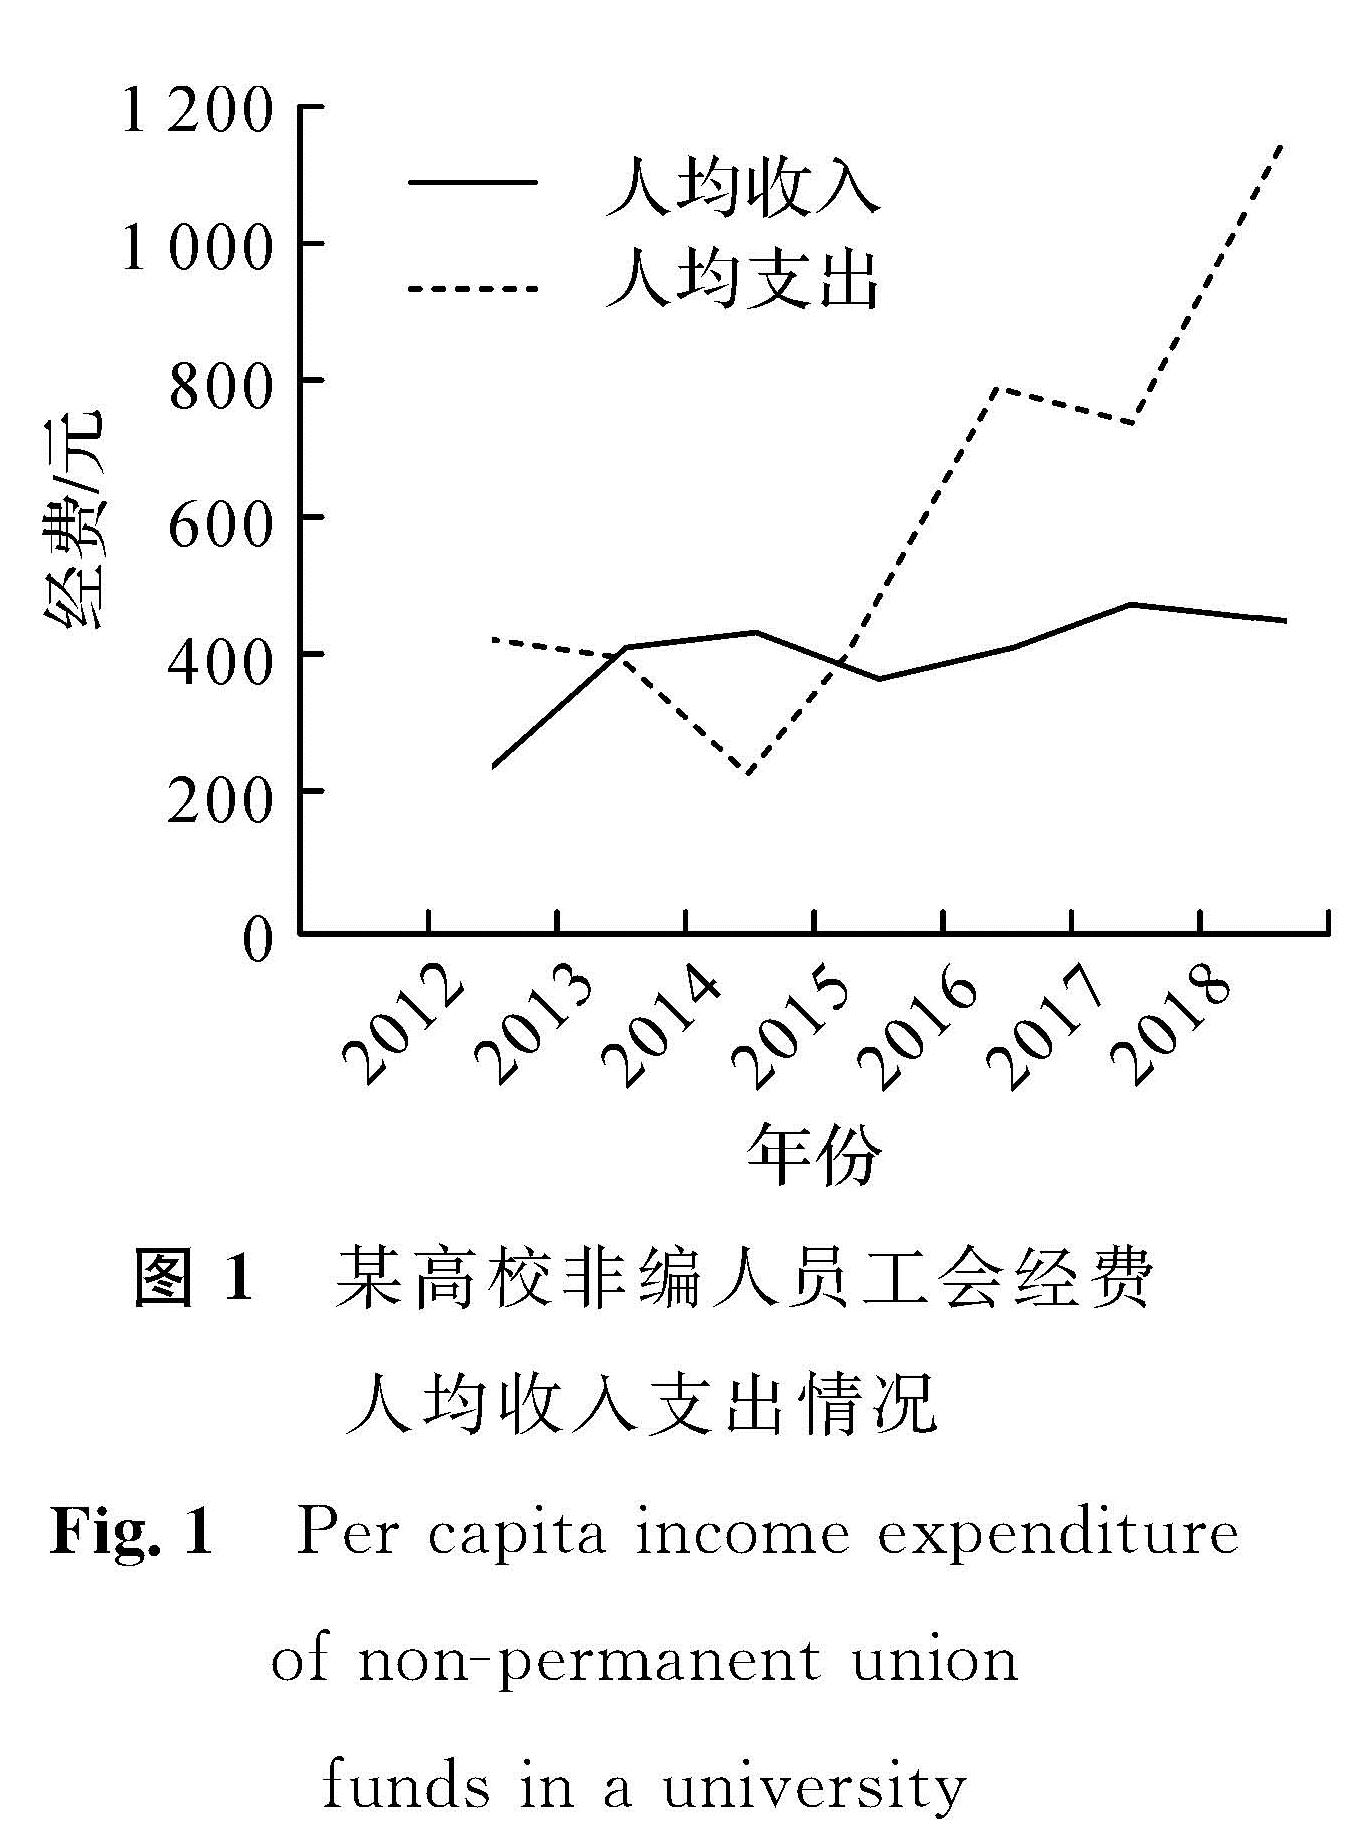 图1 某高校非编人员工会经费人均收入支出情况<br/>Fig.1 Per capita income expenditure of non-permanent union funds in a university